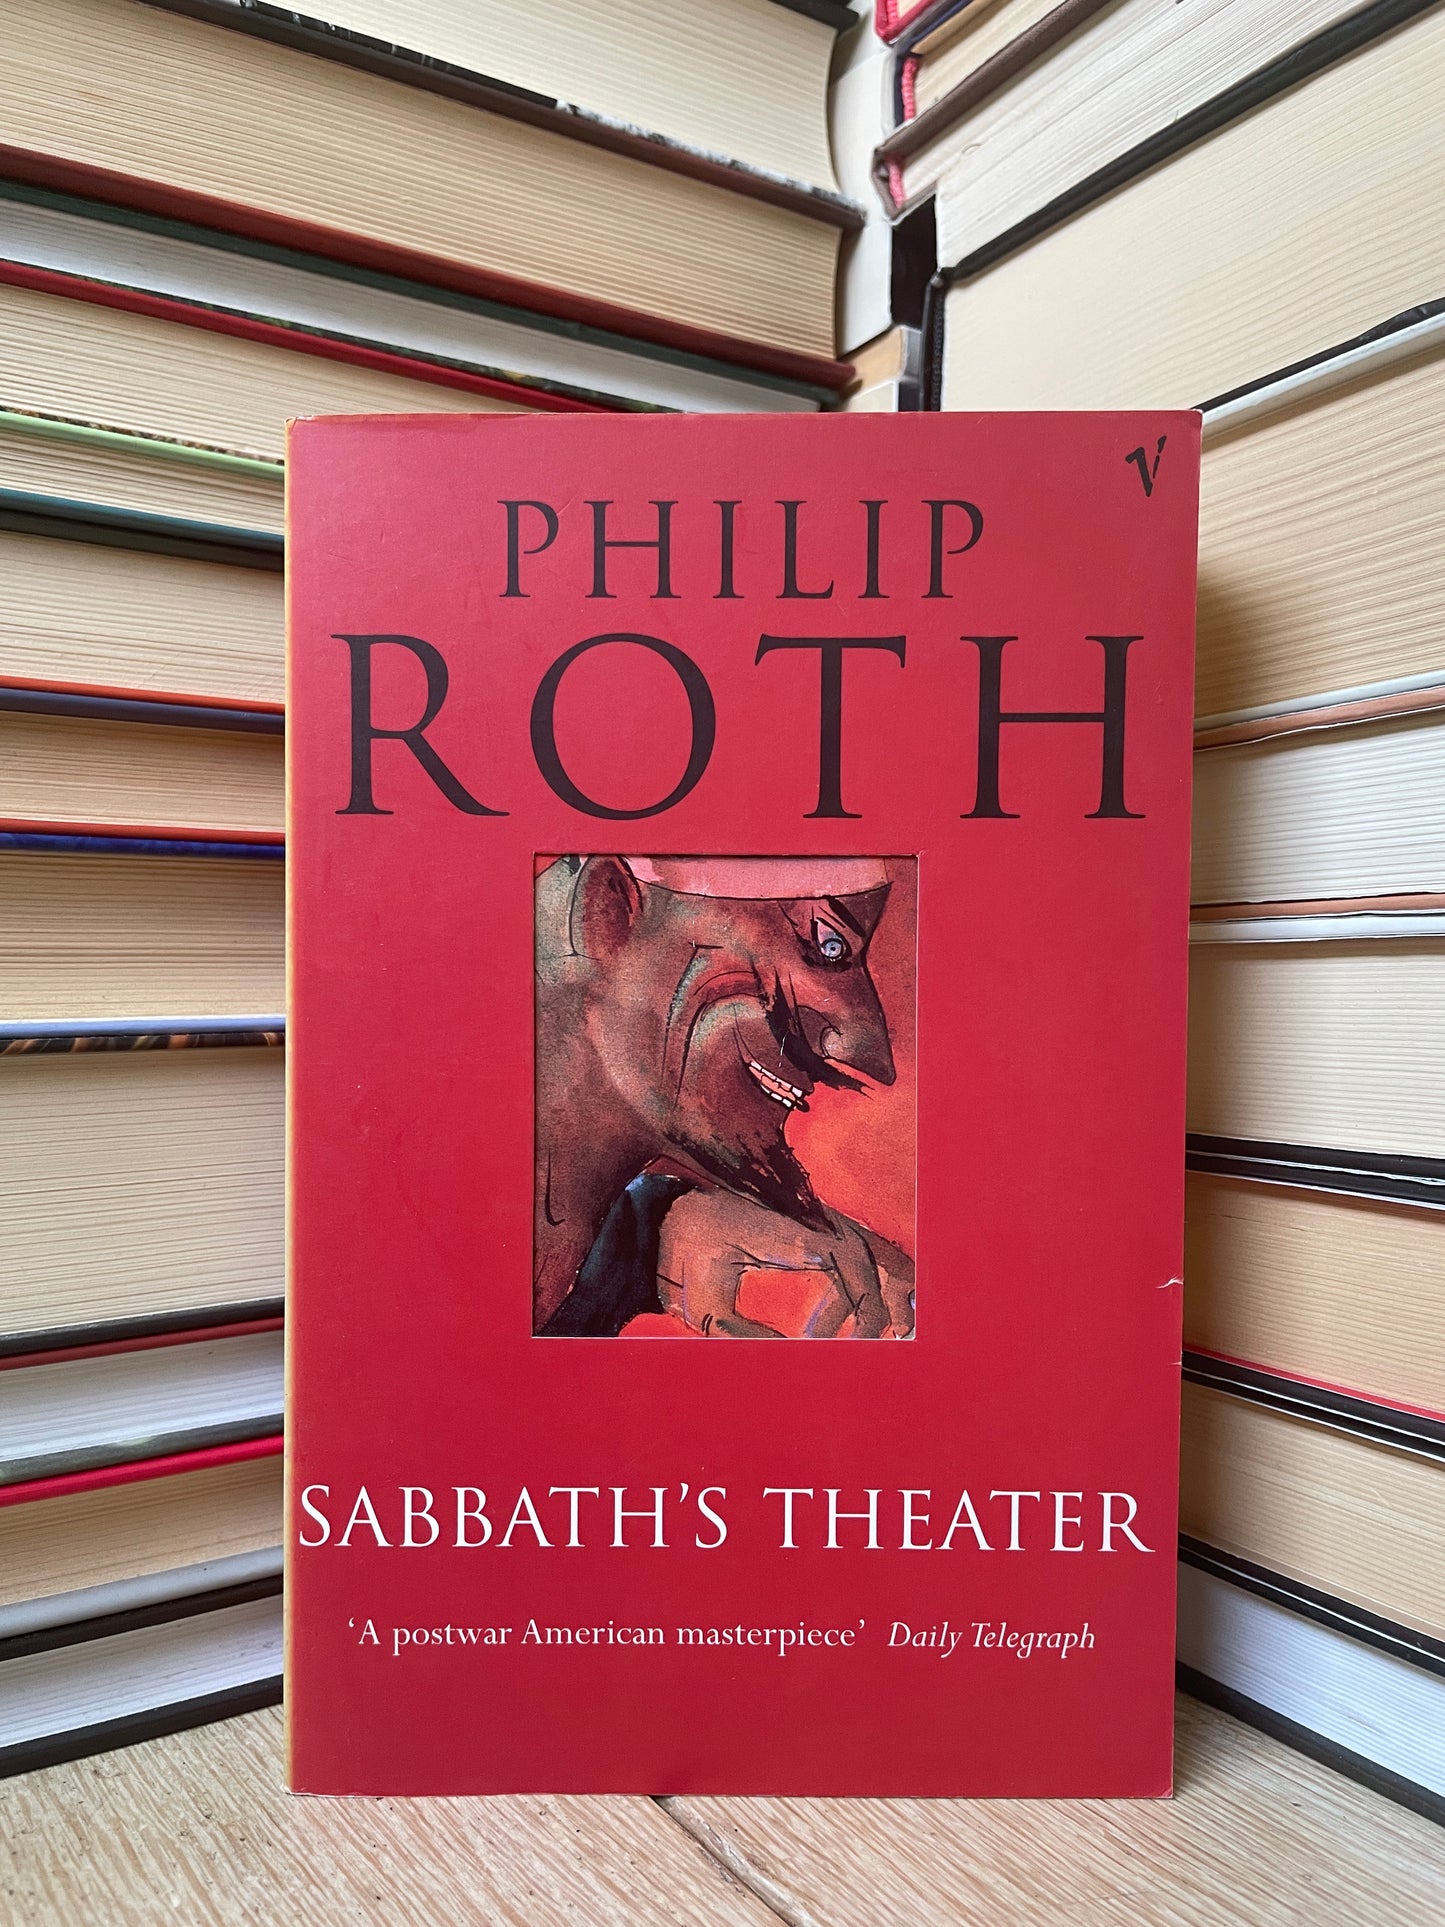 Philip Roth - Sabbath's Theater